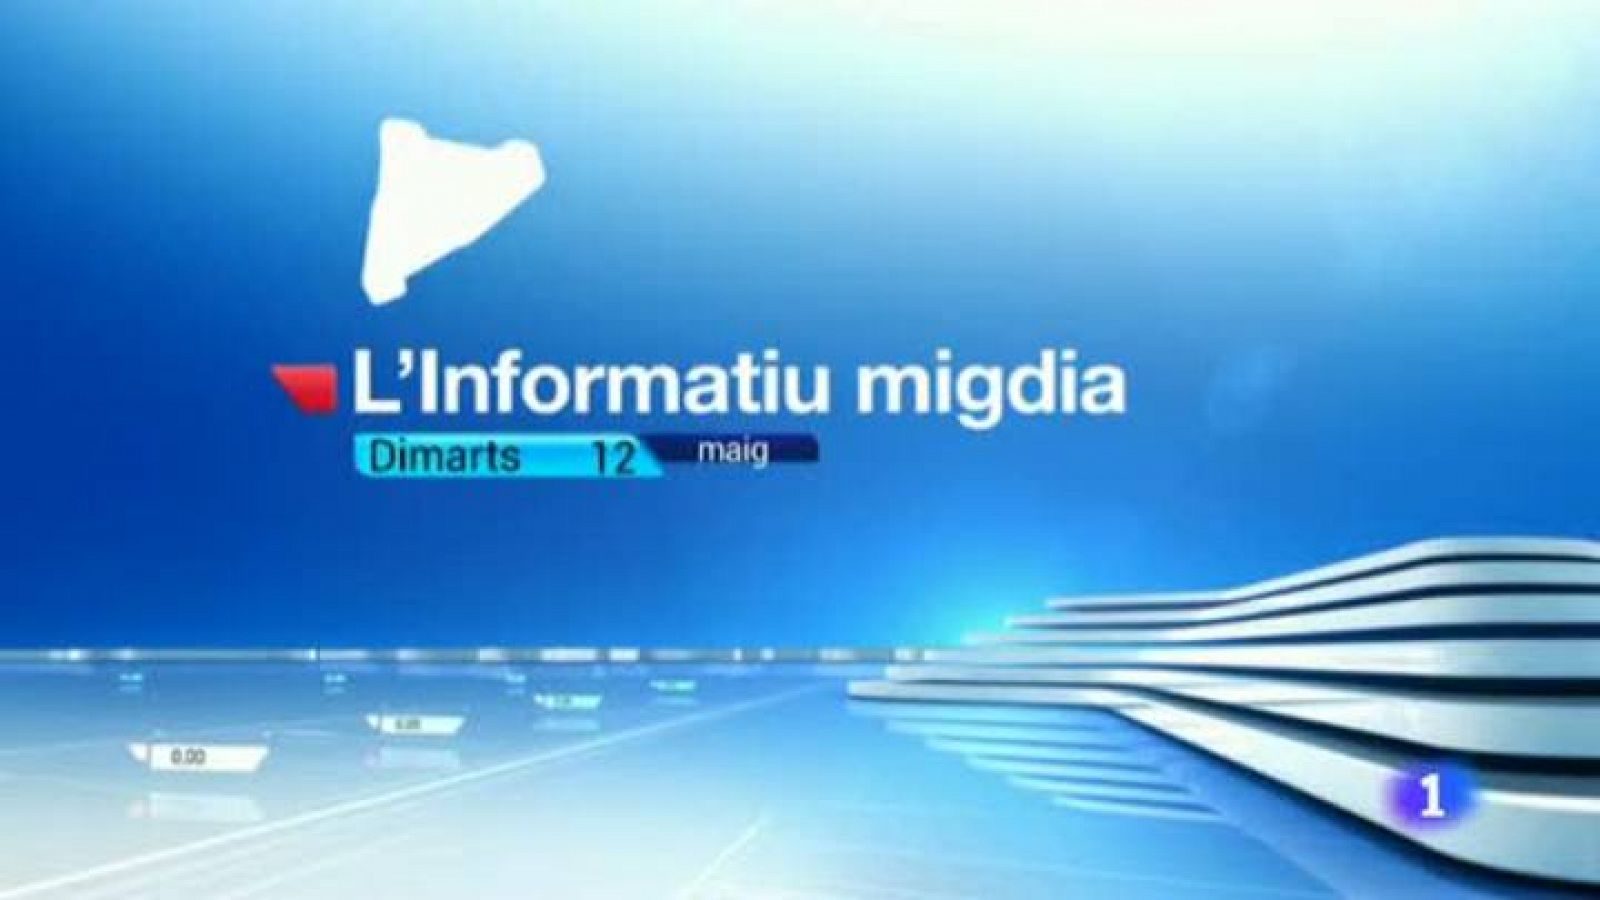 L'Informatiu: L'Informatiu en 3' - 12/05/15 | RTVE Play